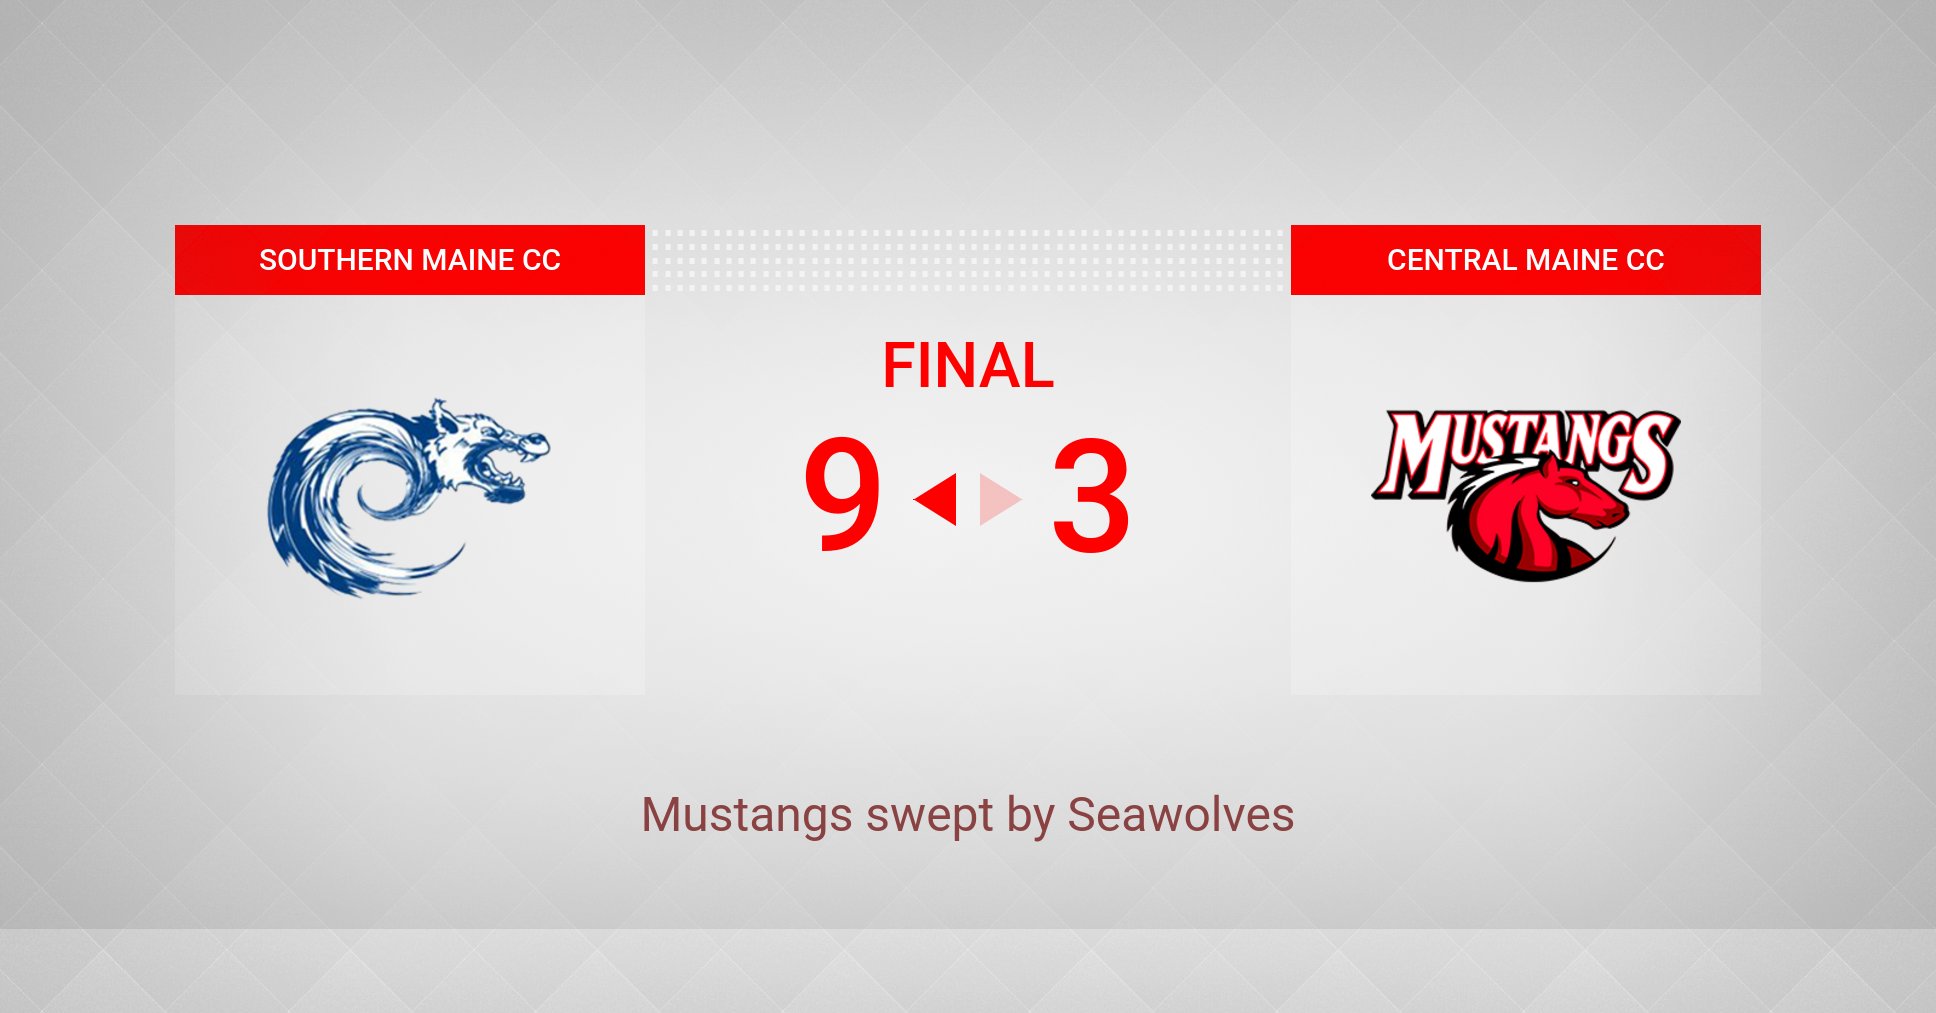 Mustangs swept by Seawolves